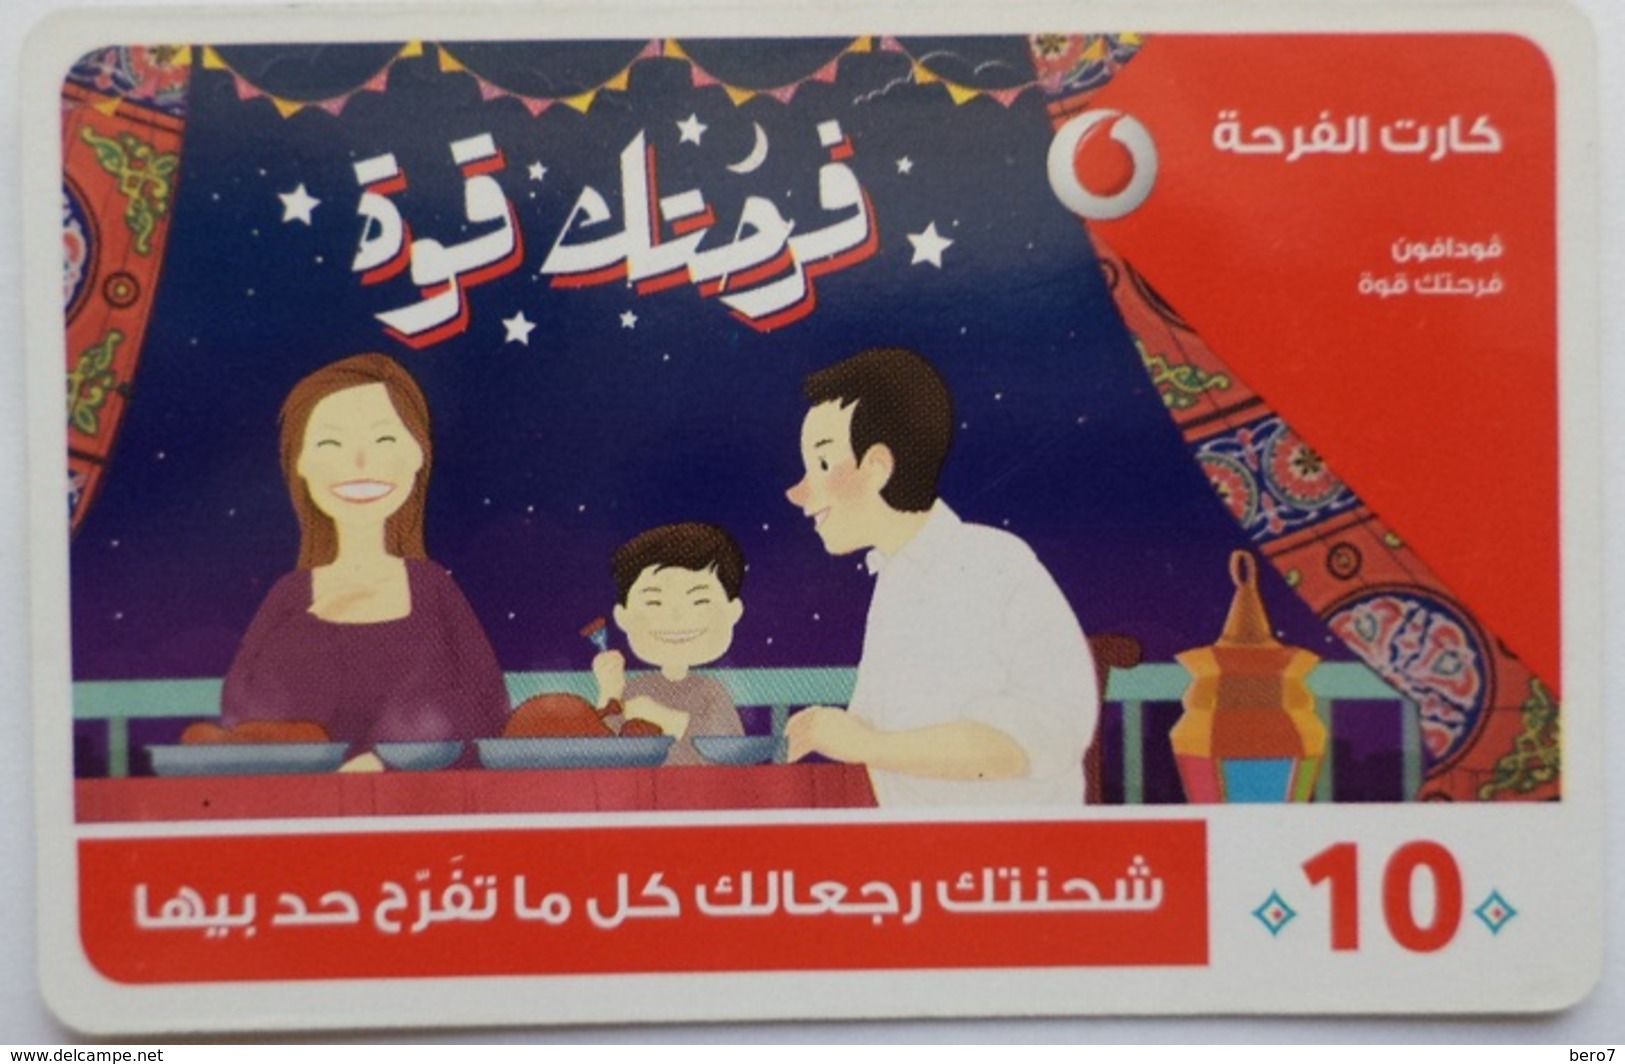 EGYPT - Happiness  Card 10 L.E, Vodafone , [used] (Egypte) (Egitto) (Ägypten) (Egipto) (Egypten) - Egypt